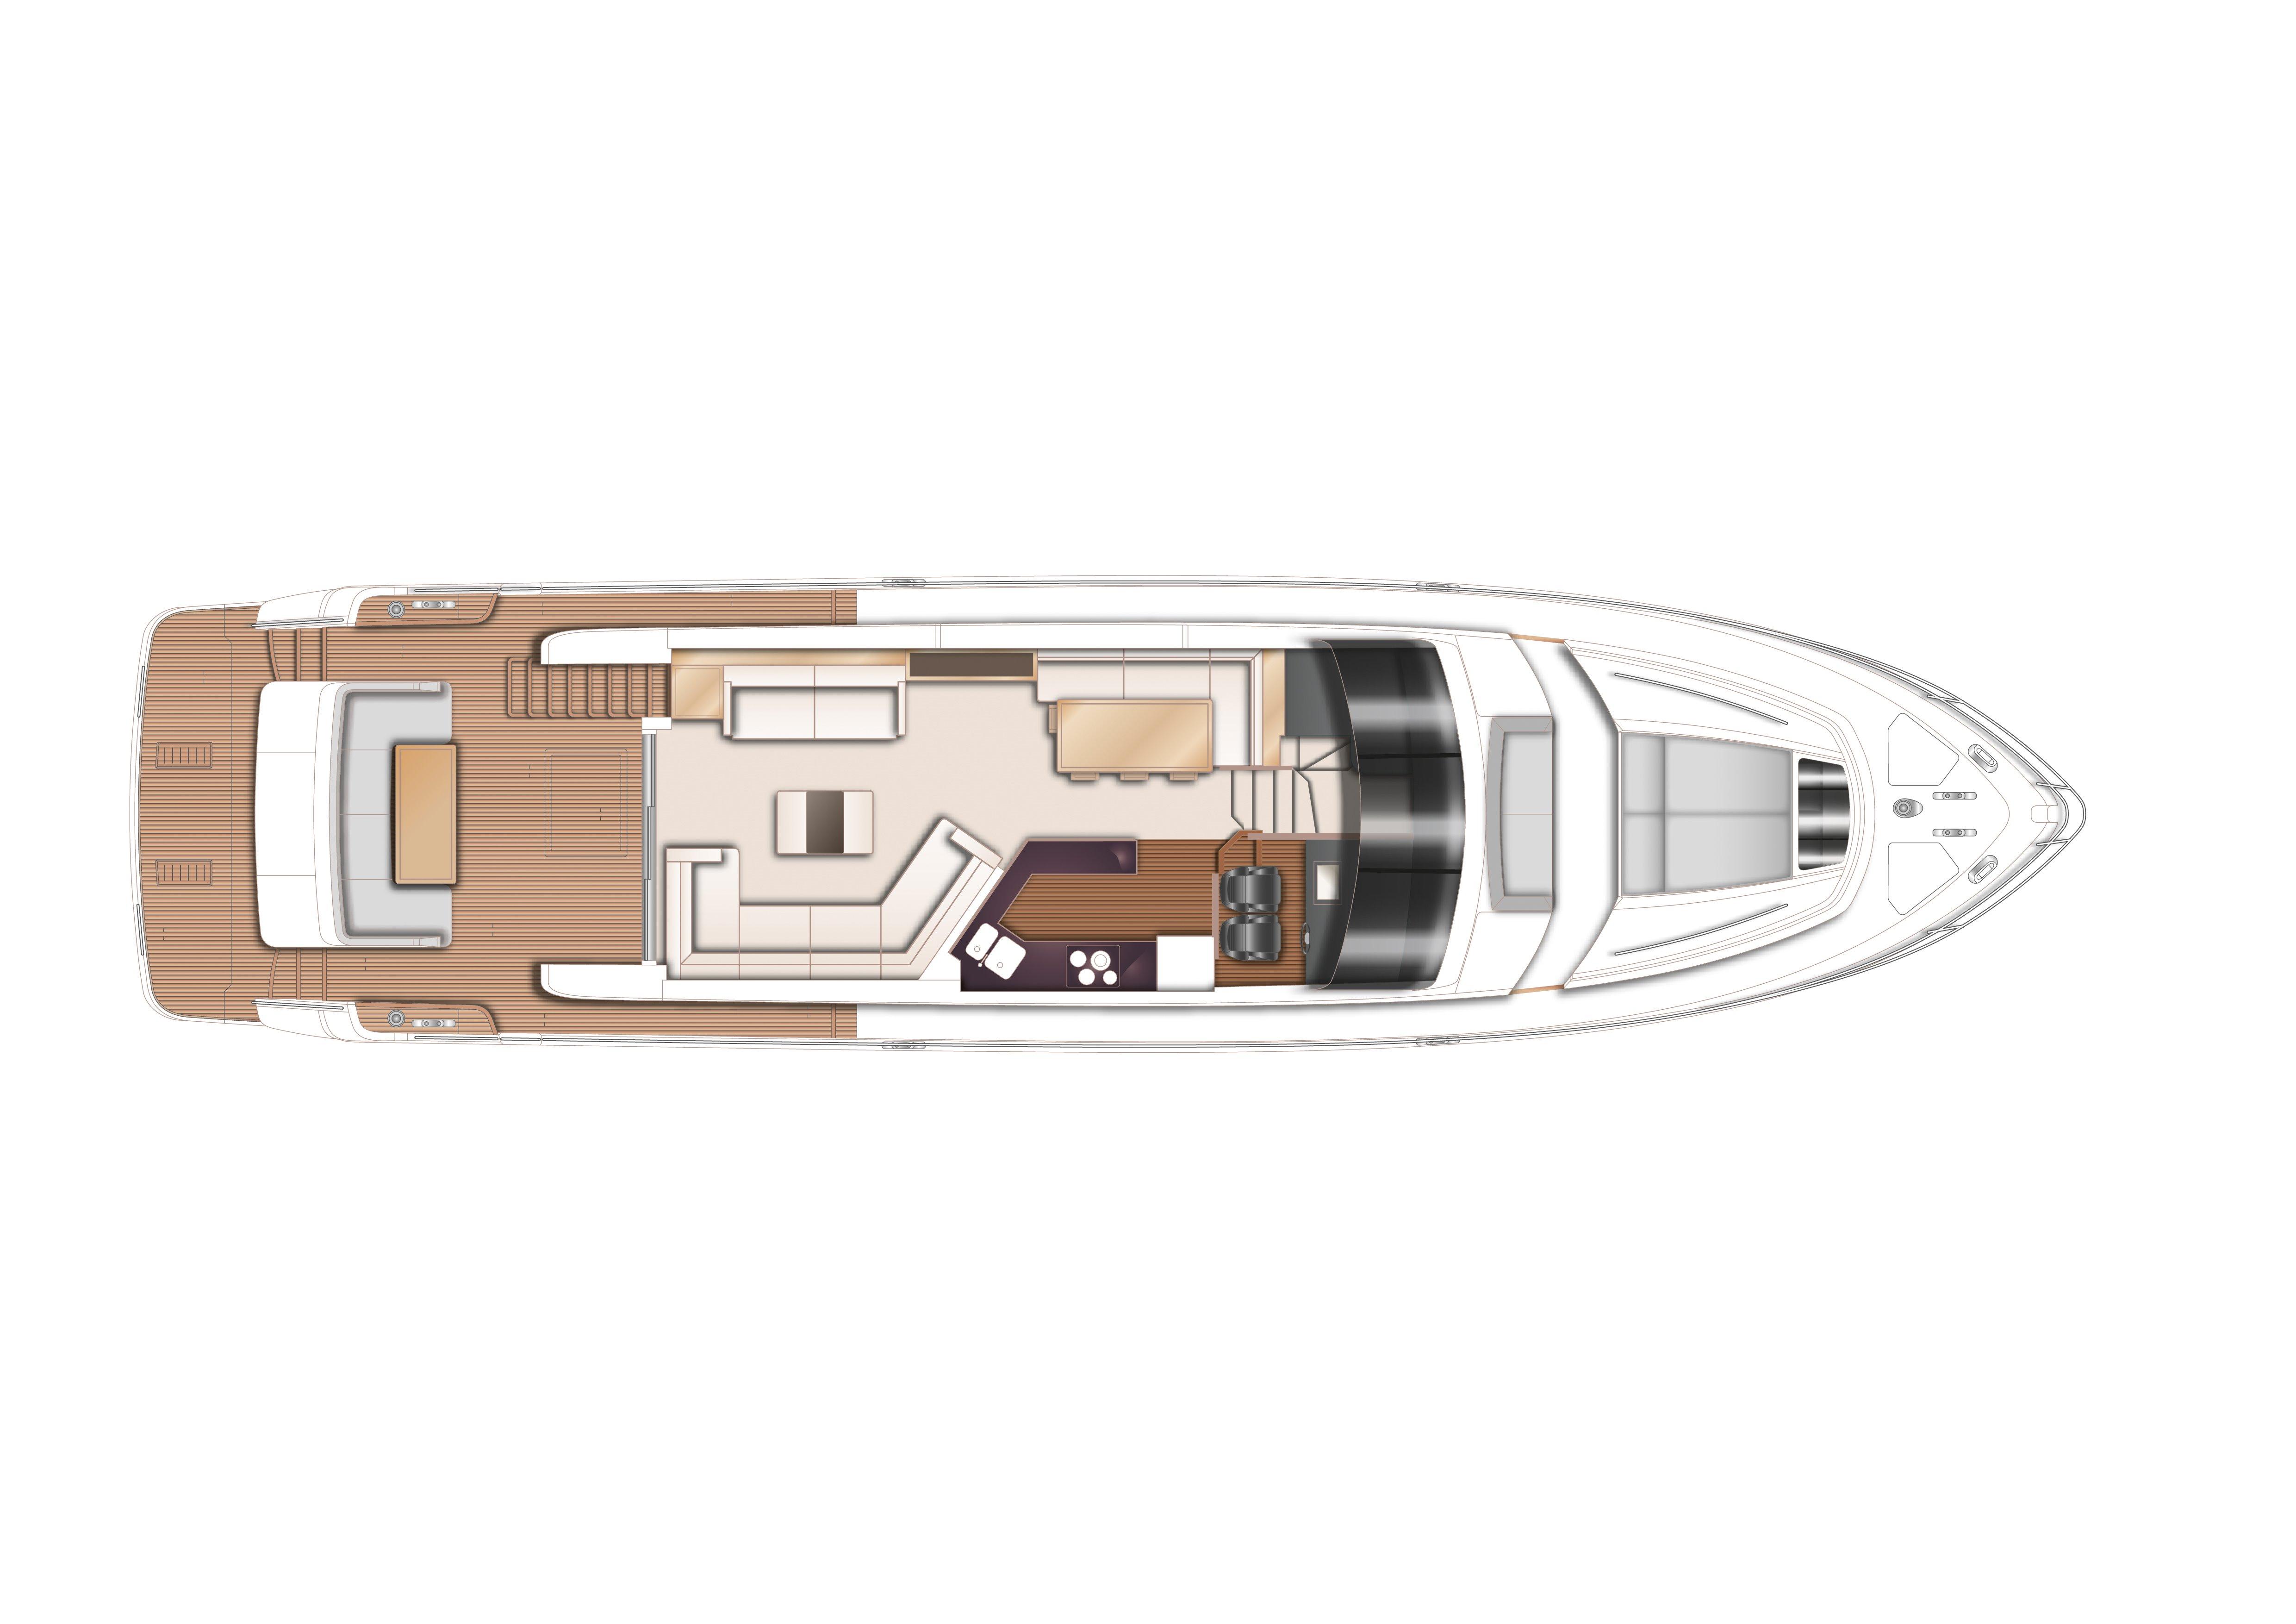 Manufacturer Provided Image: Princess 72 Motor Yacht Upper Deck Layout Plan